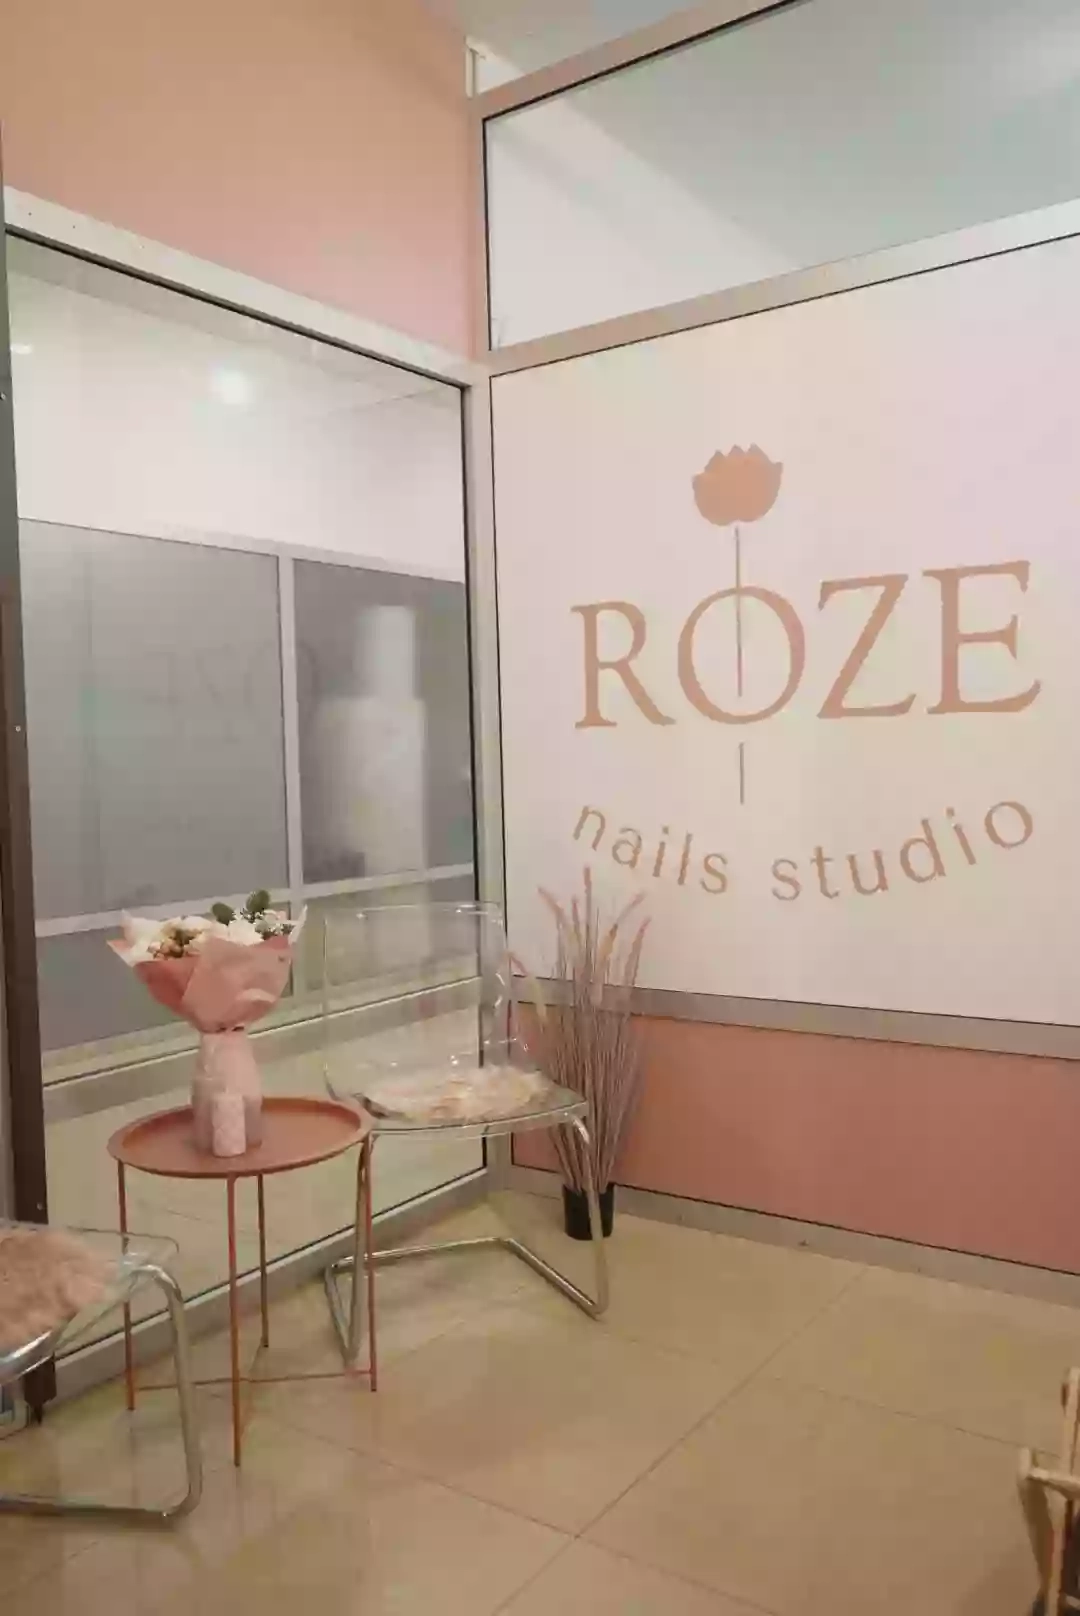 ROZE nails studio